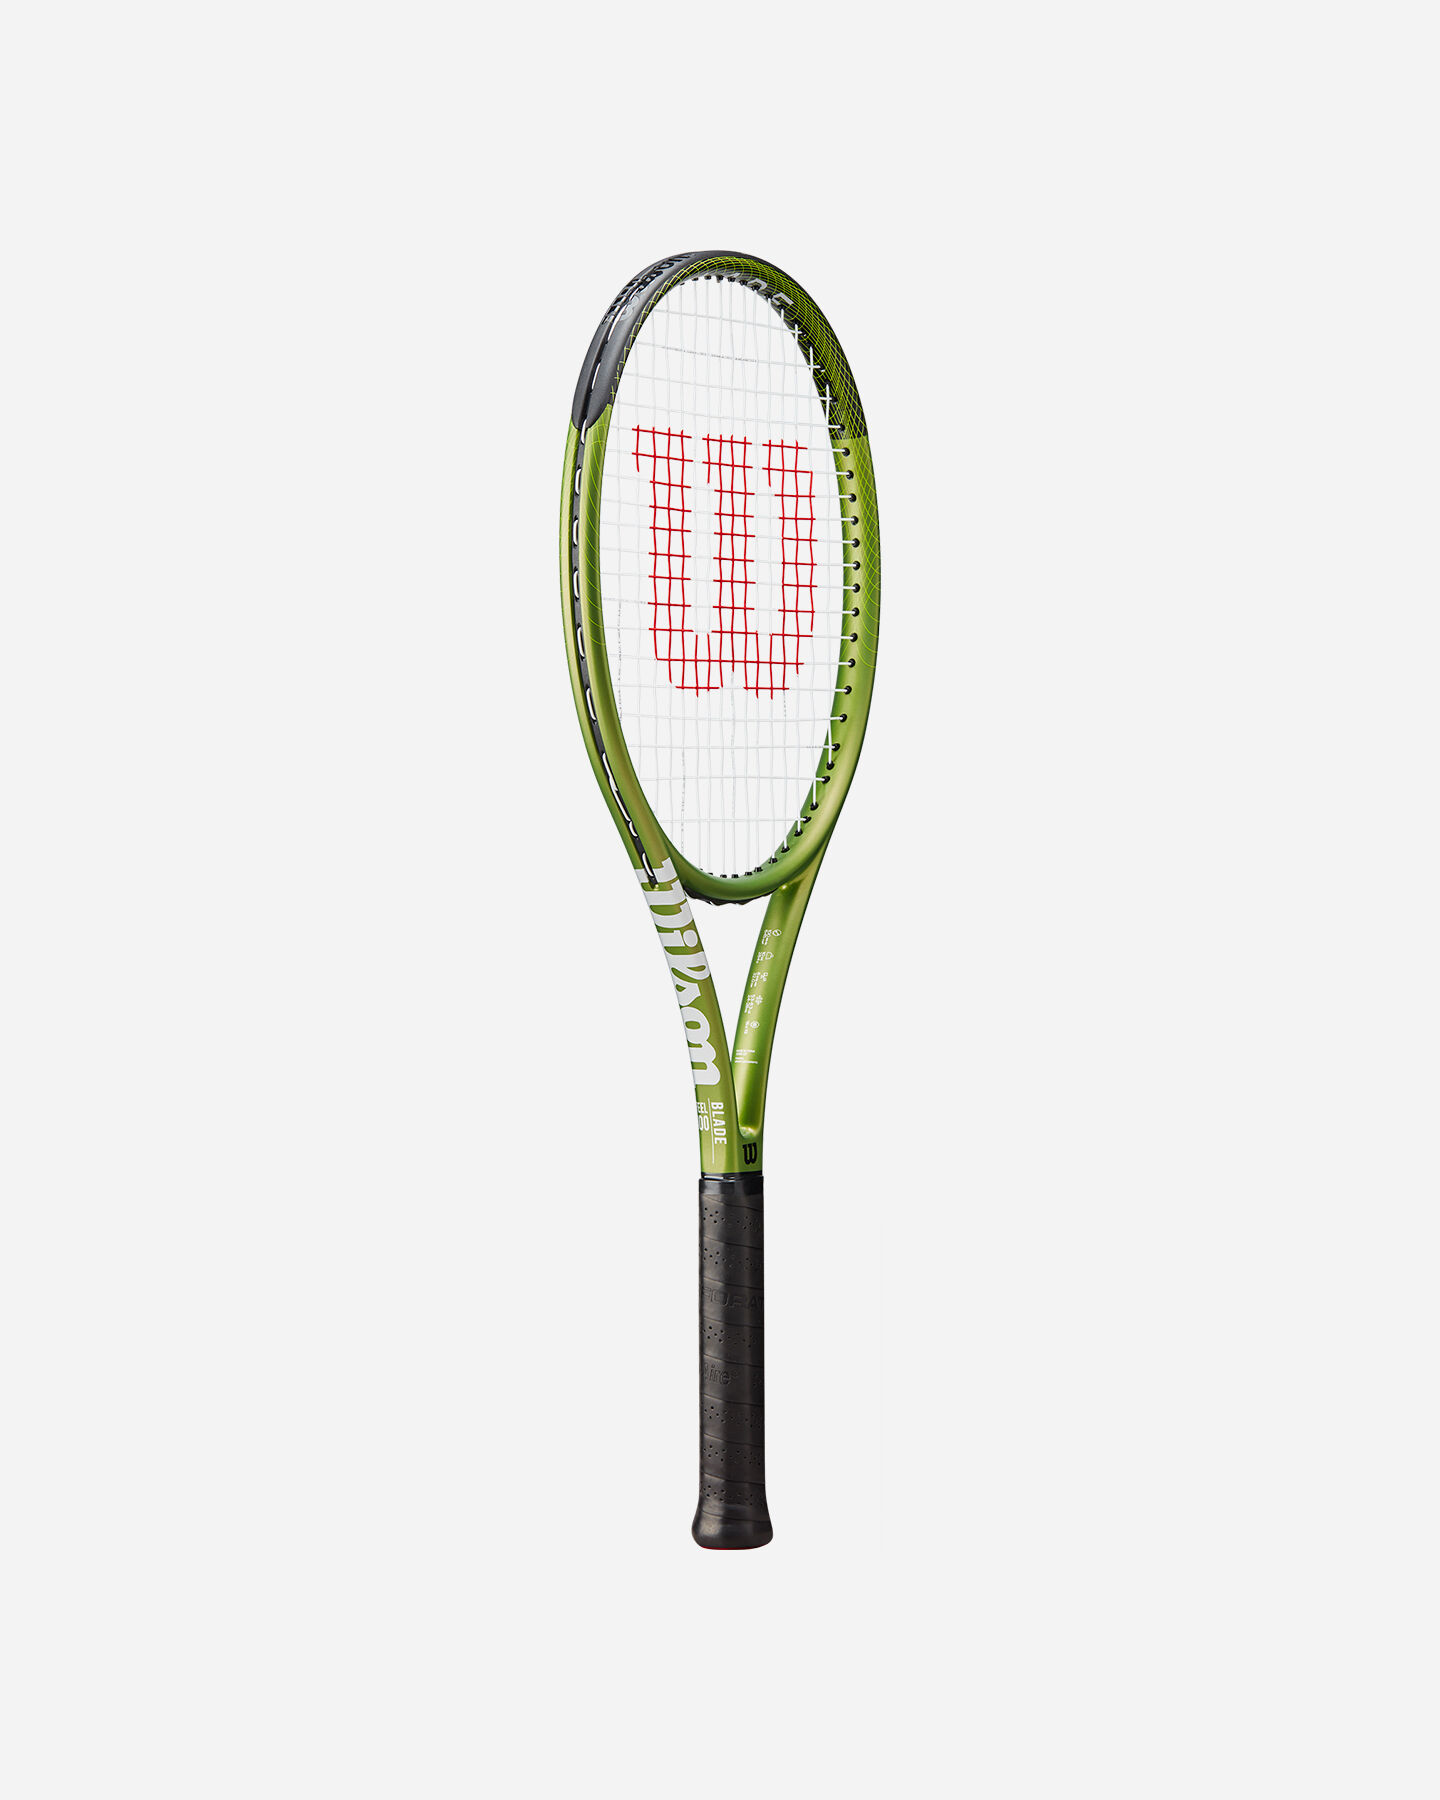  Racchetta tennis WILSON BLADE FEEL 100 300G  S5617179|UNI|2 scatto 1